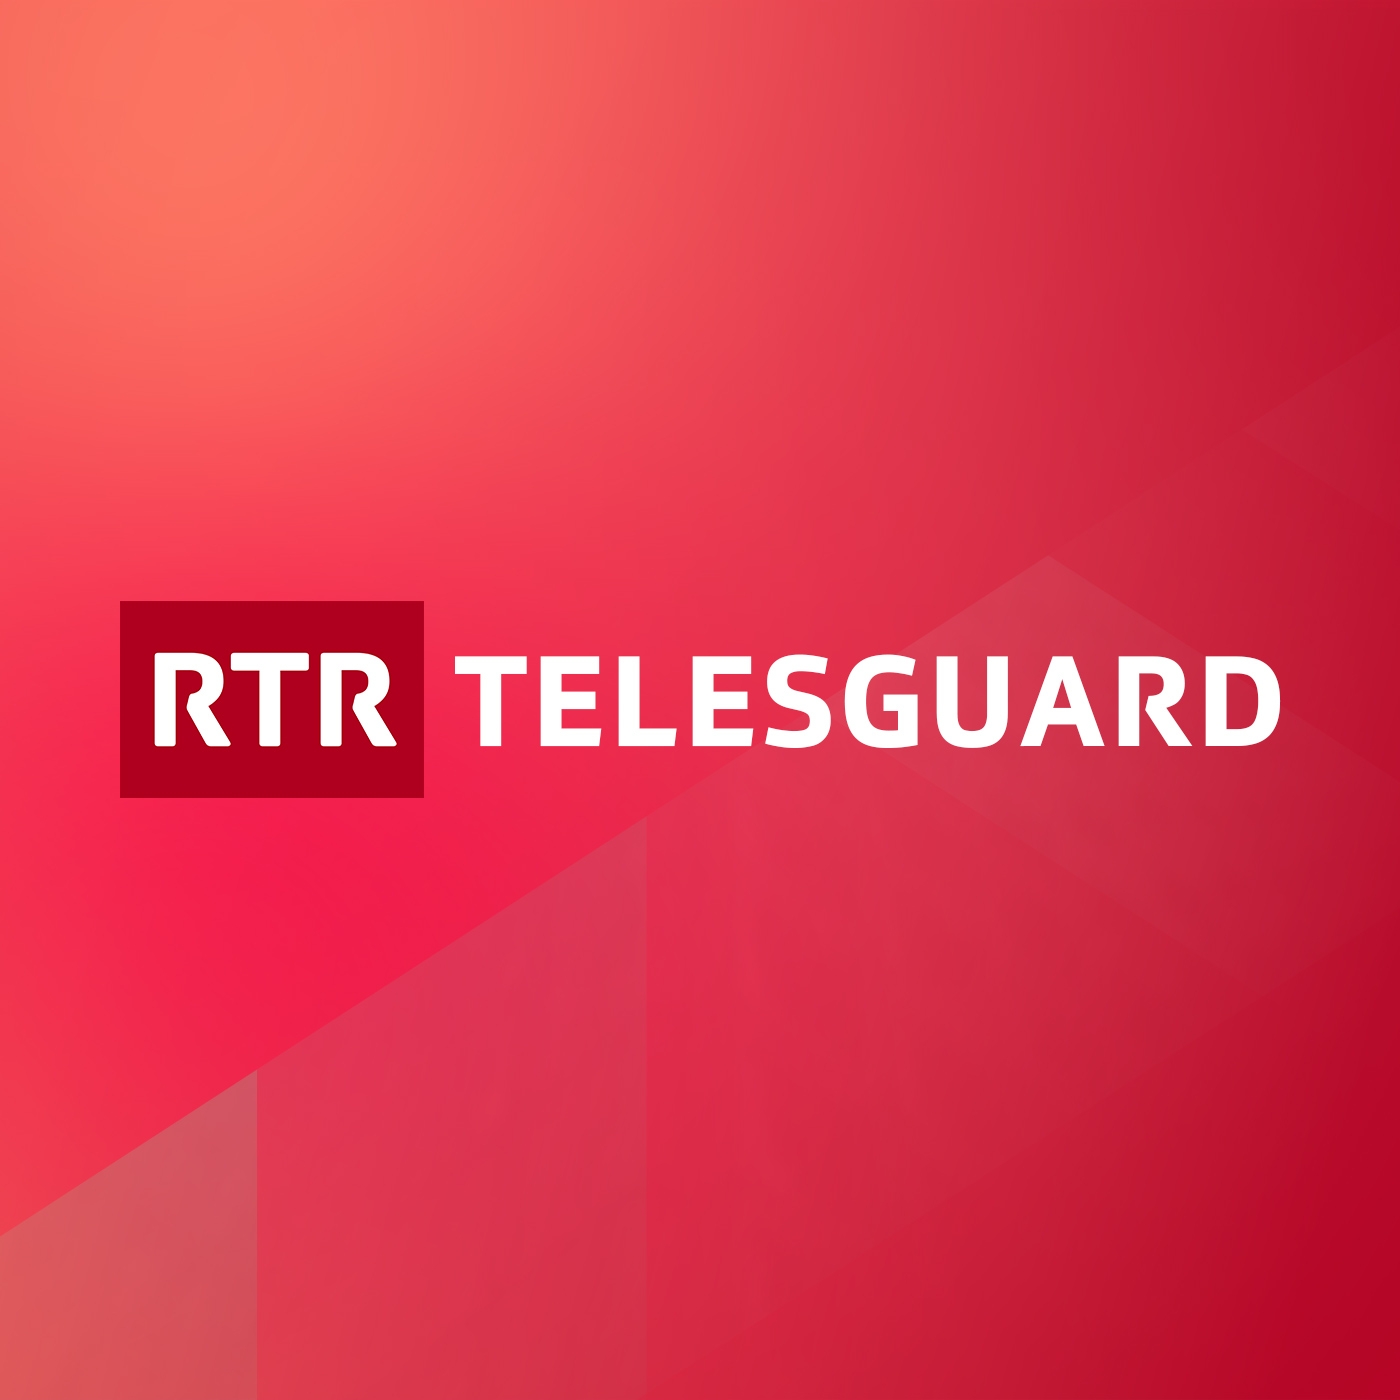 Telesguard:Radiotelevisiun Svizra Rumantscha (RTR)